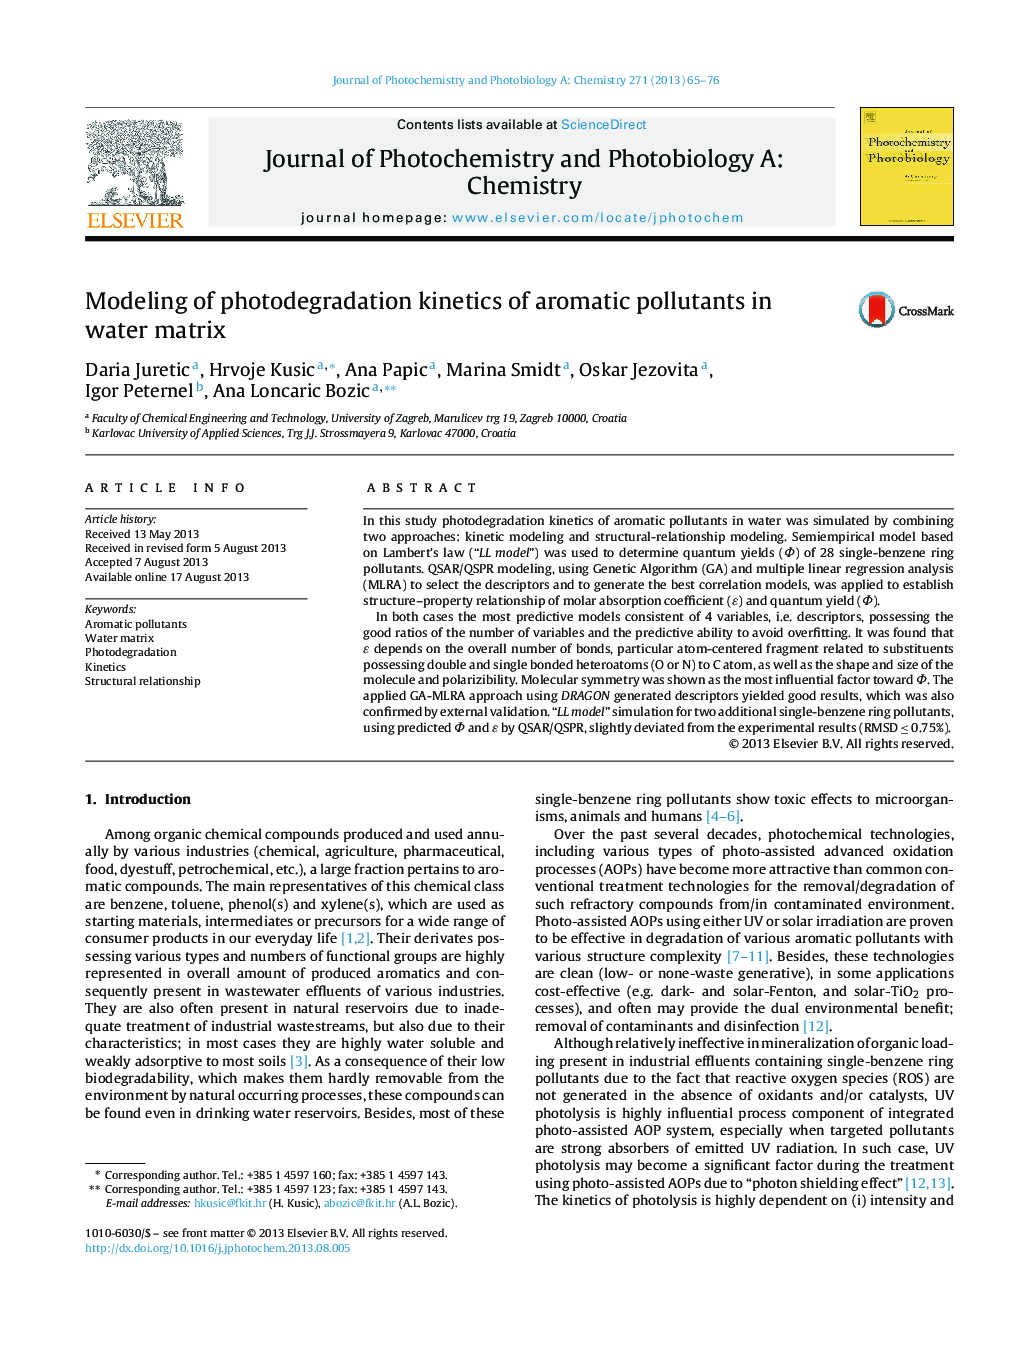 Modeling of photodegradation kinetics of aromatic pollutants in water matrix